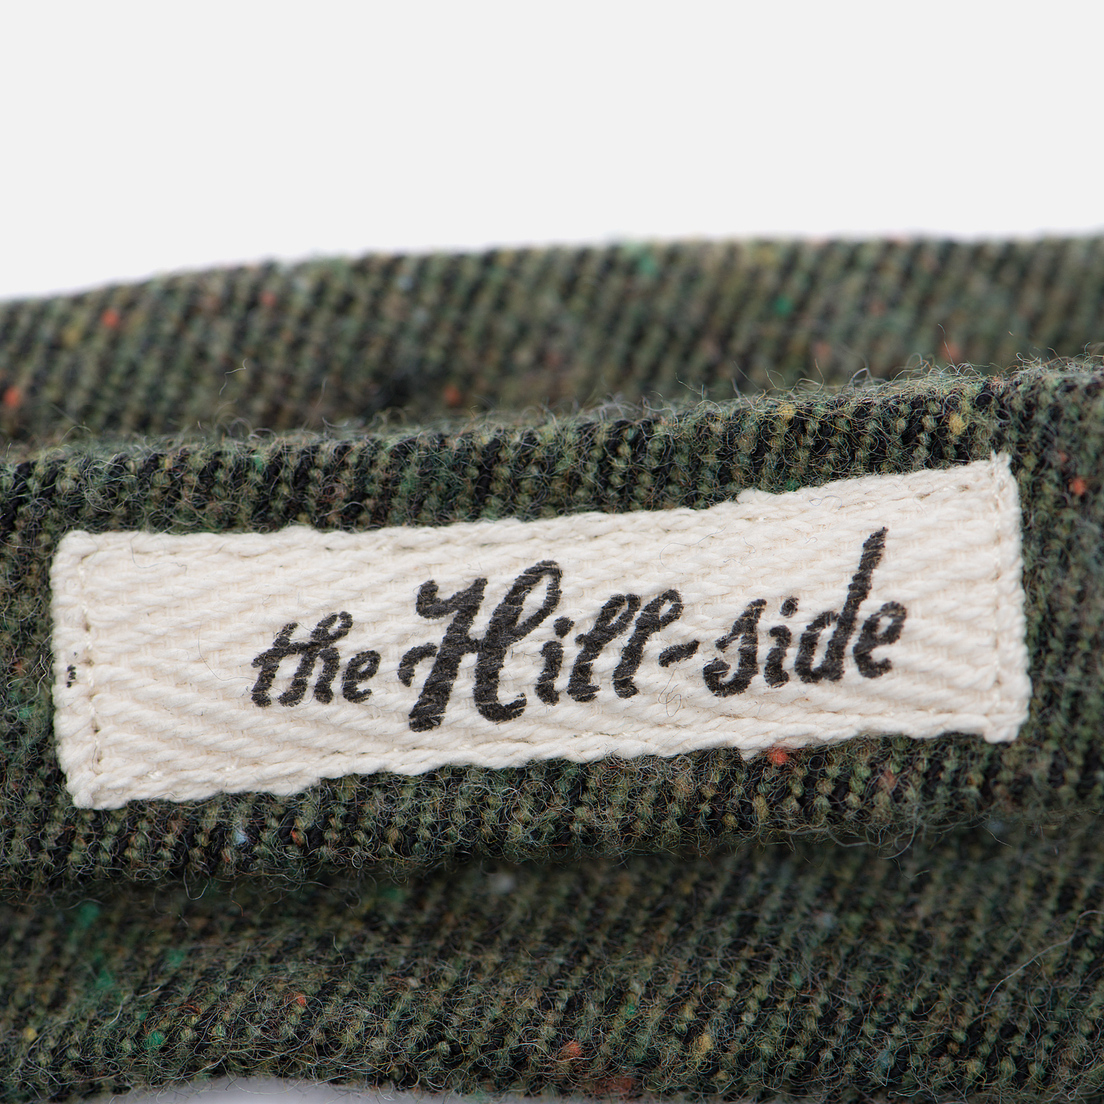 The Hill-Side Мужской галстук-бабочка Wool Blend Galaxy Tweed